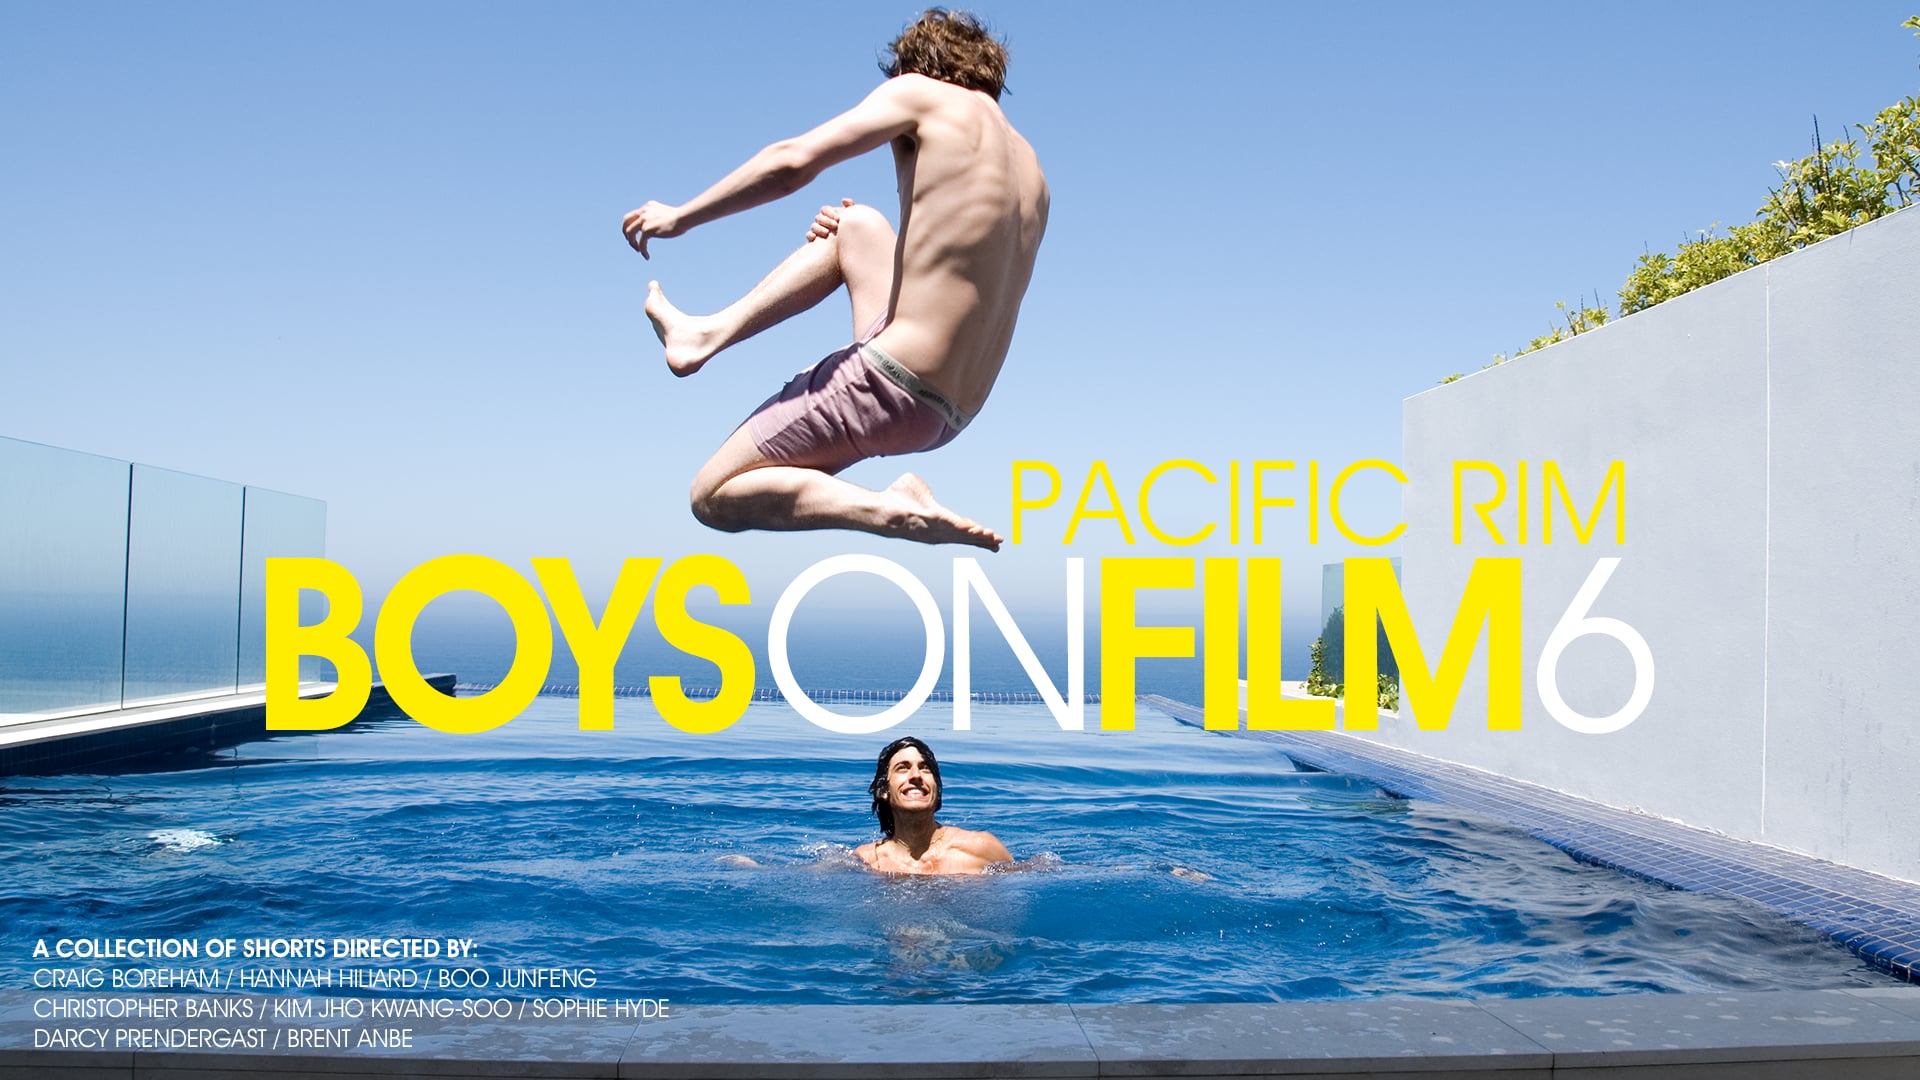 Watch Boys on Film 6 Trailer Online Vimeo On Demand on Vimeo